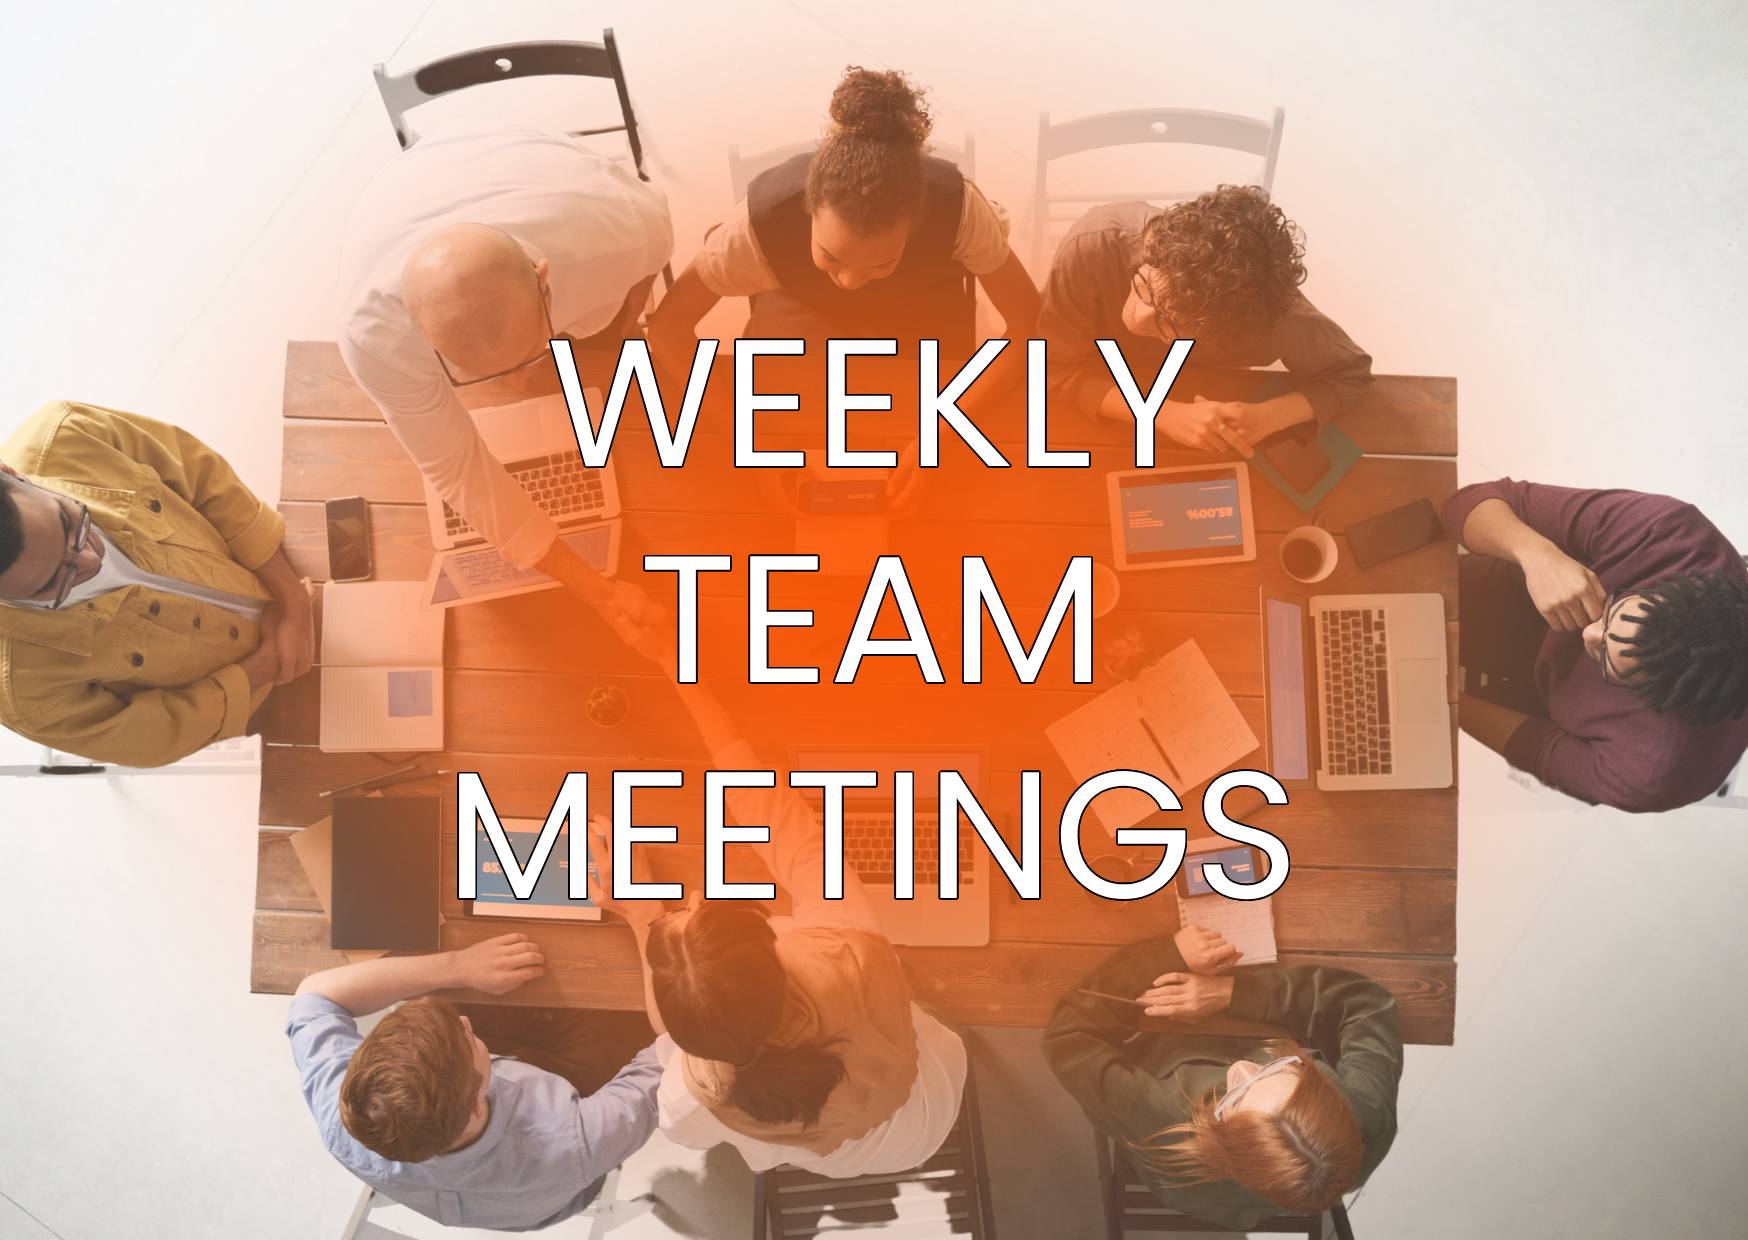 WEEKLY-TEAM-MEETINGS-WRITTEN-INFRONT-OF-EMPLOYEES-HAVING-A-TEAM-MEETING